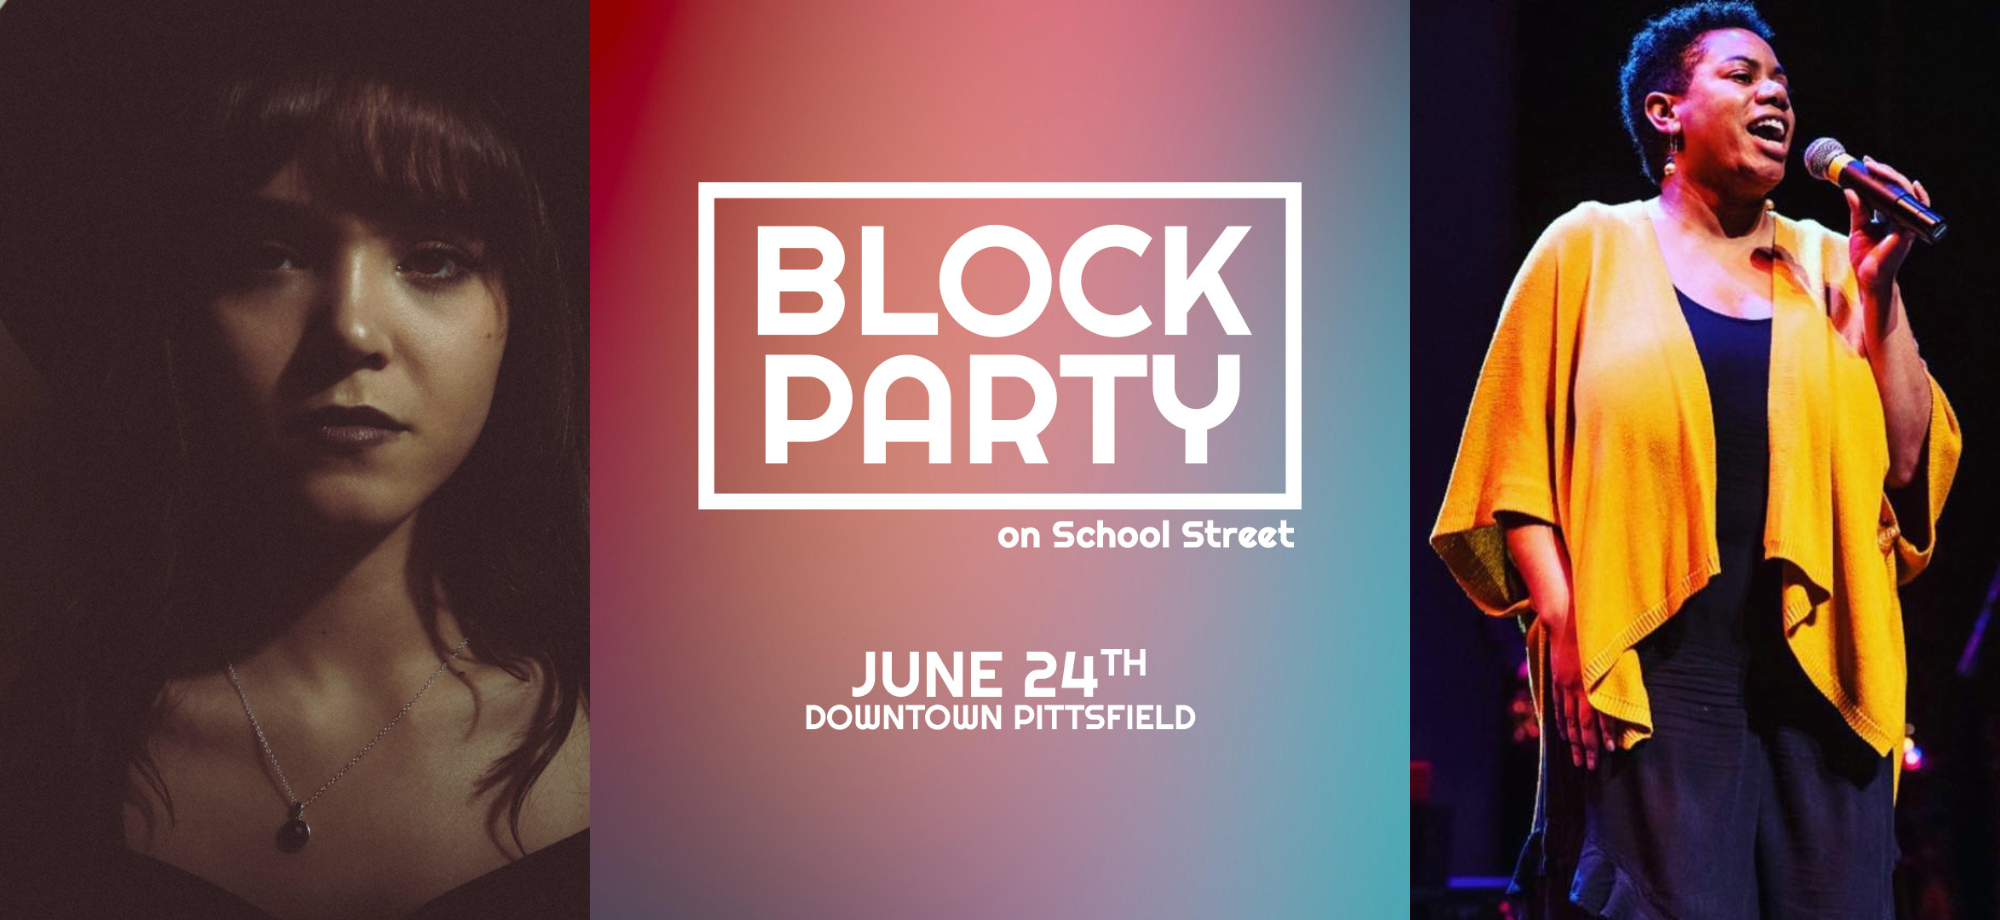 School Street Block Party - Saturday, June 24 - Downtown Pittsfield